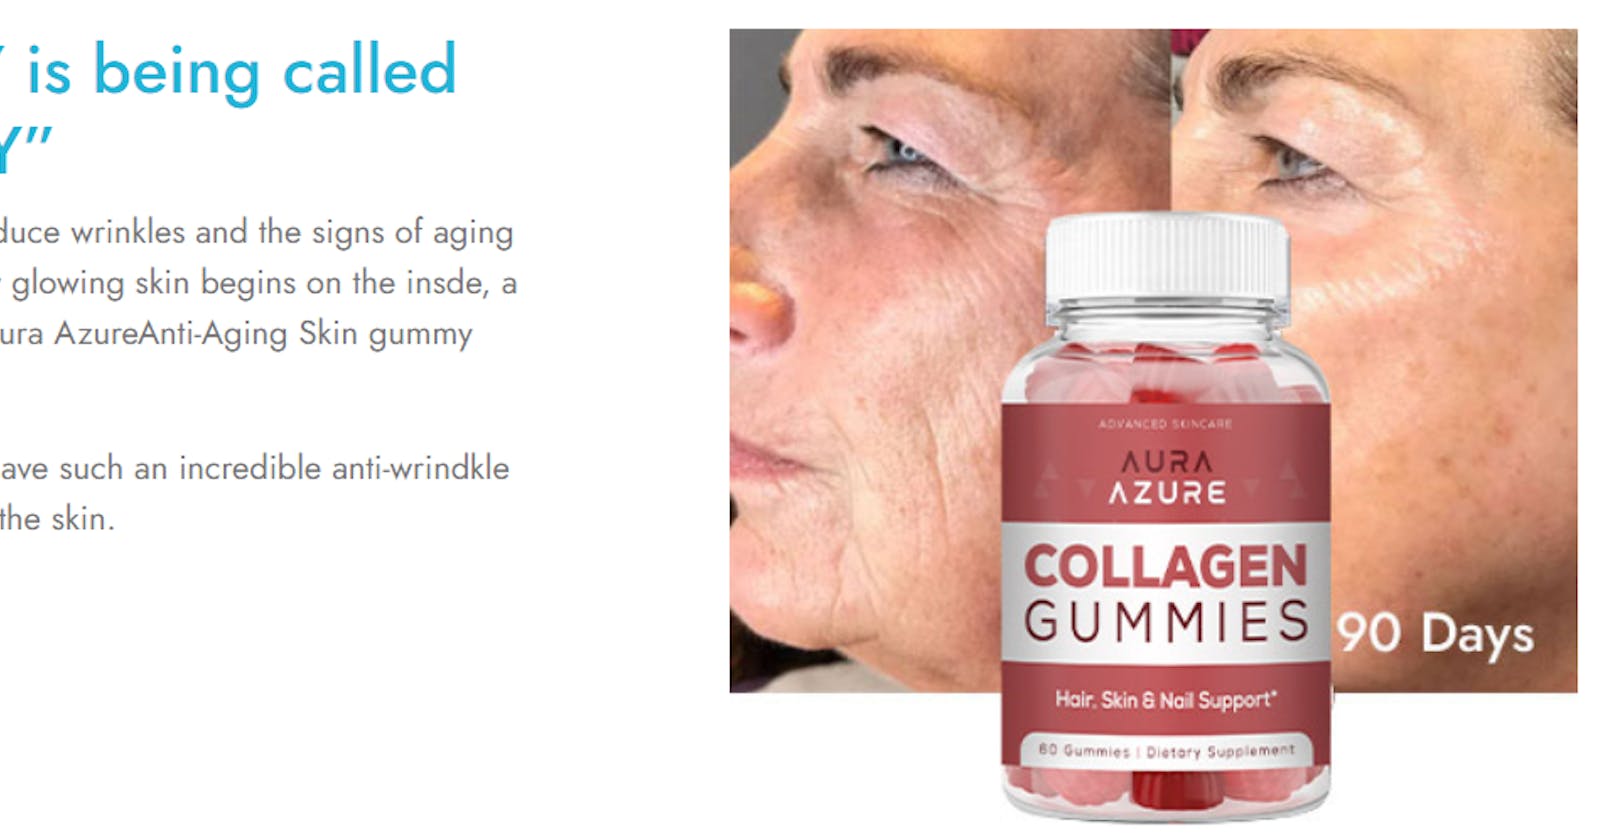 Enhance Your Beauty Routine with Aura Azure Collagen Gummies!